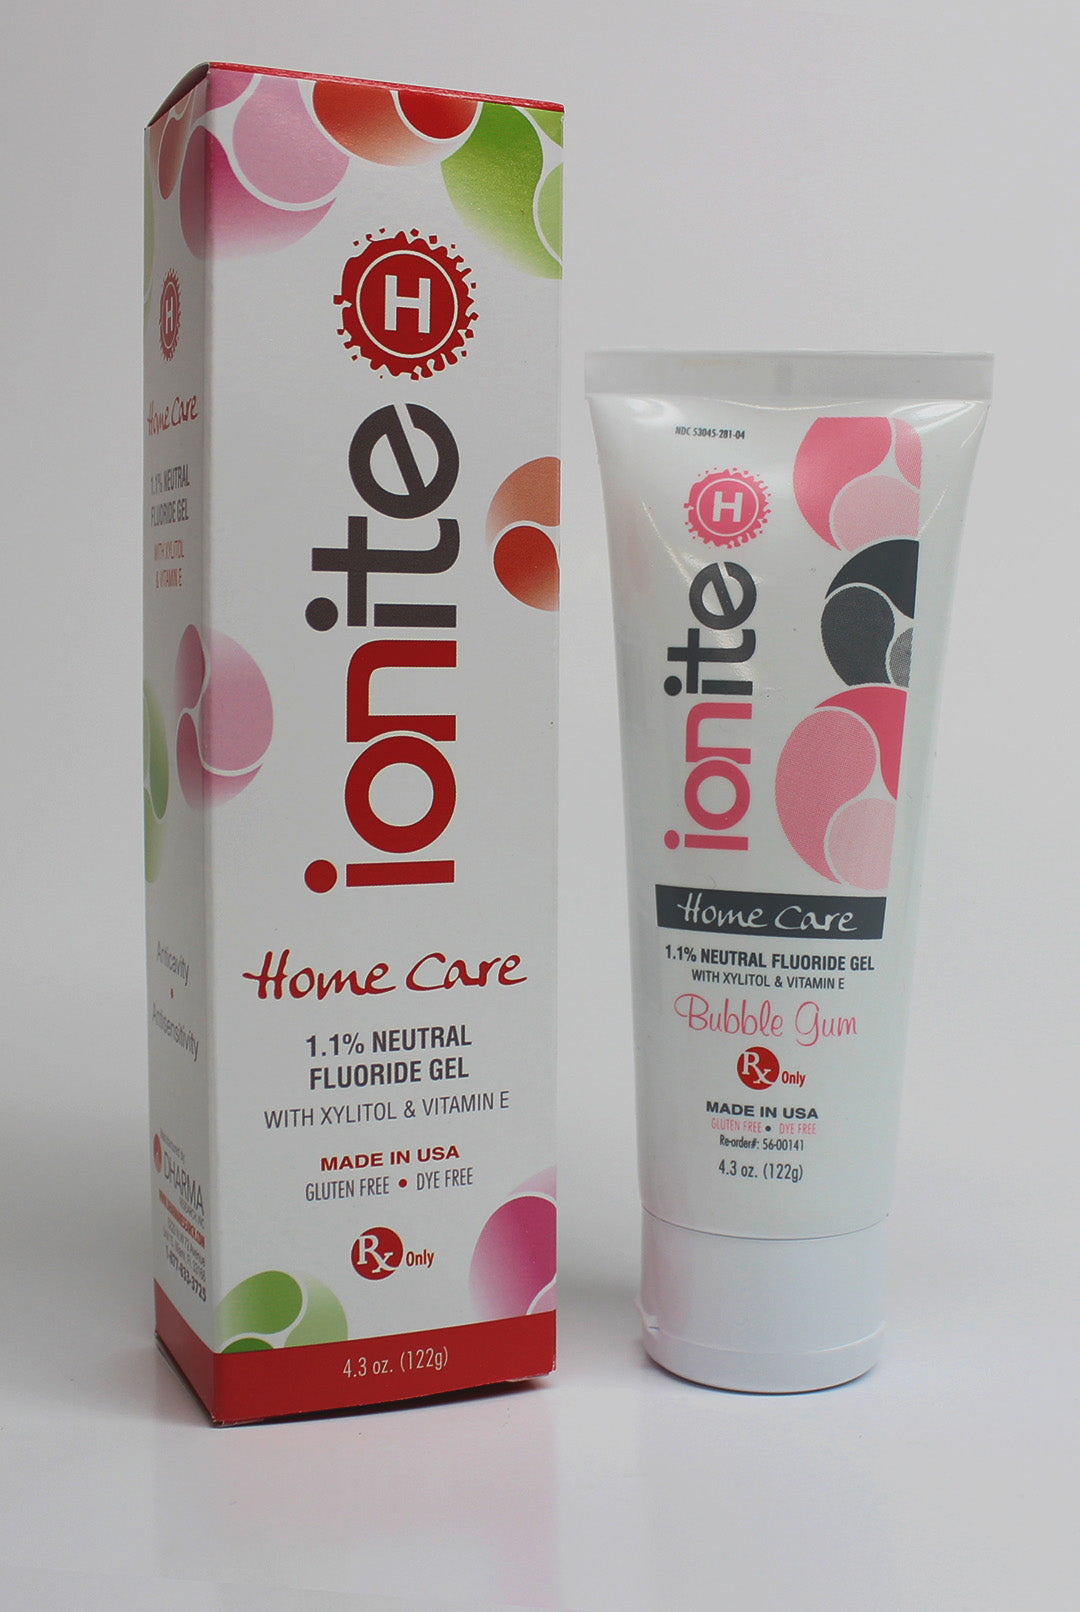 Ionite H Home Care 1.1% Neutral Fluoride Dentifrice 43oz Bottle